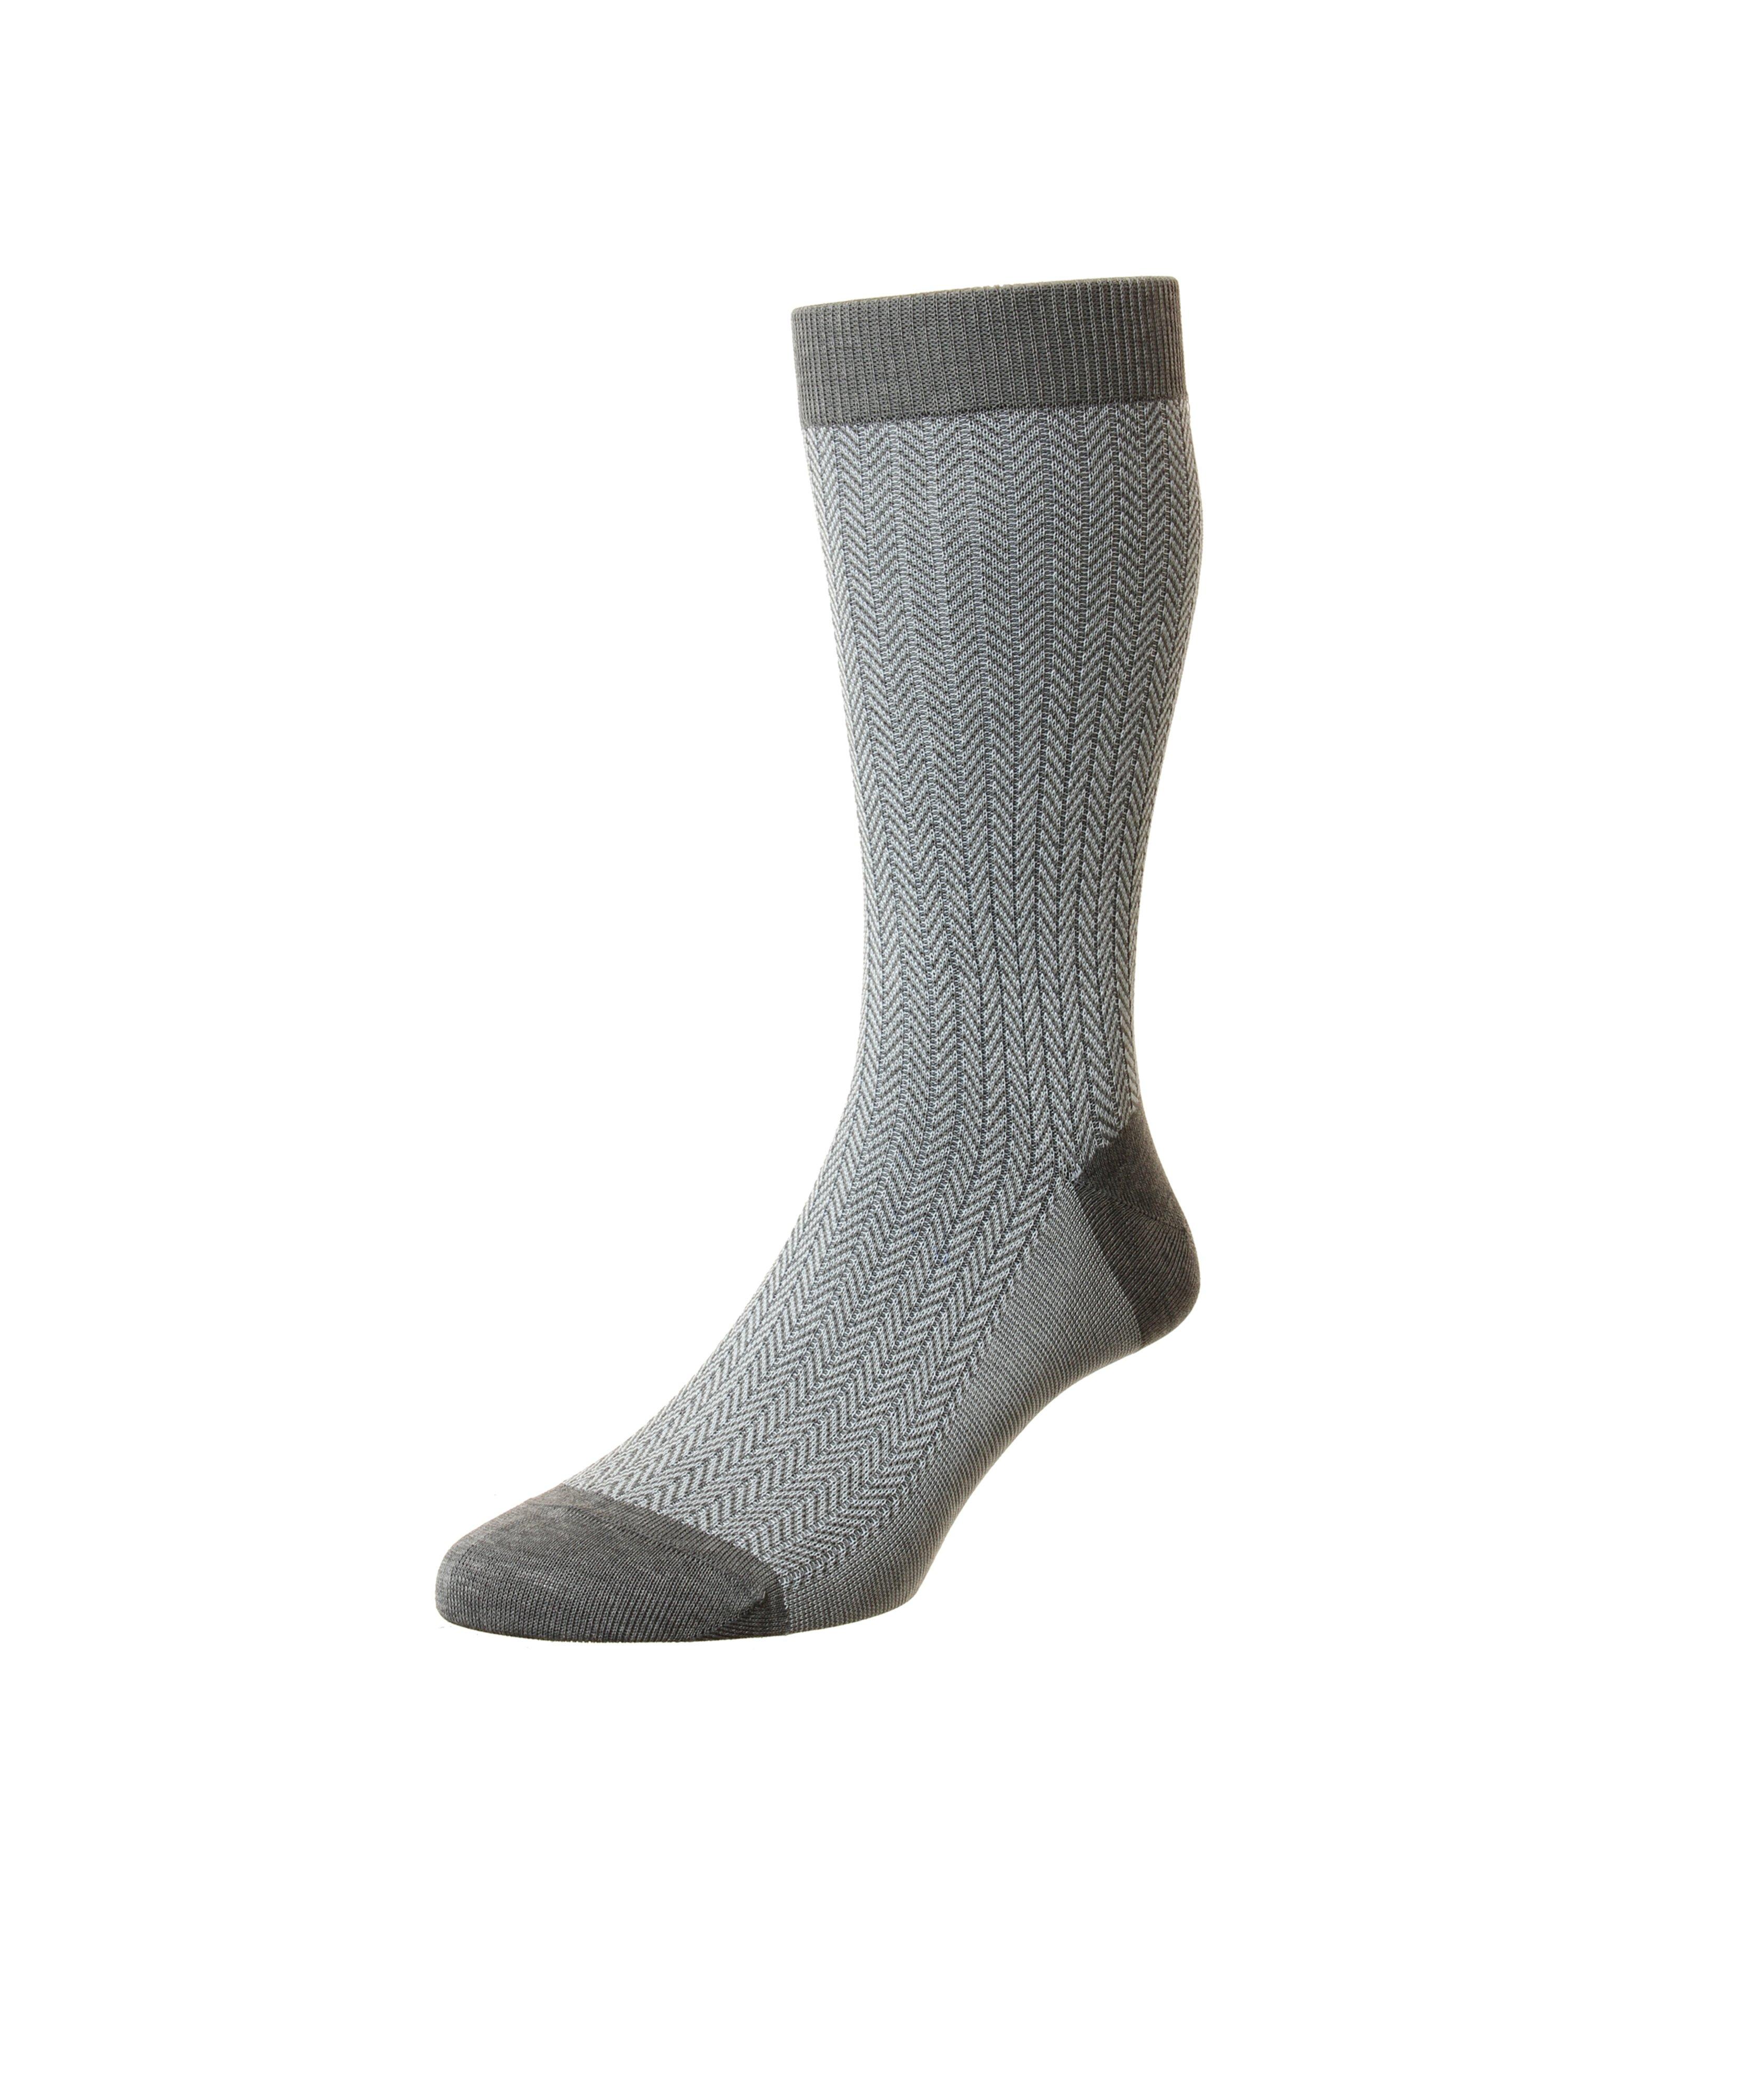 Fabian Herringbone Cotton-Blend Dress Socks image 0